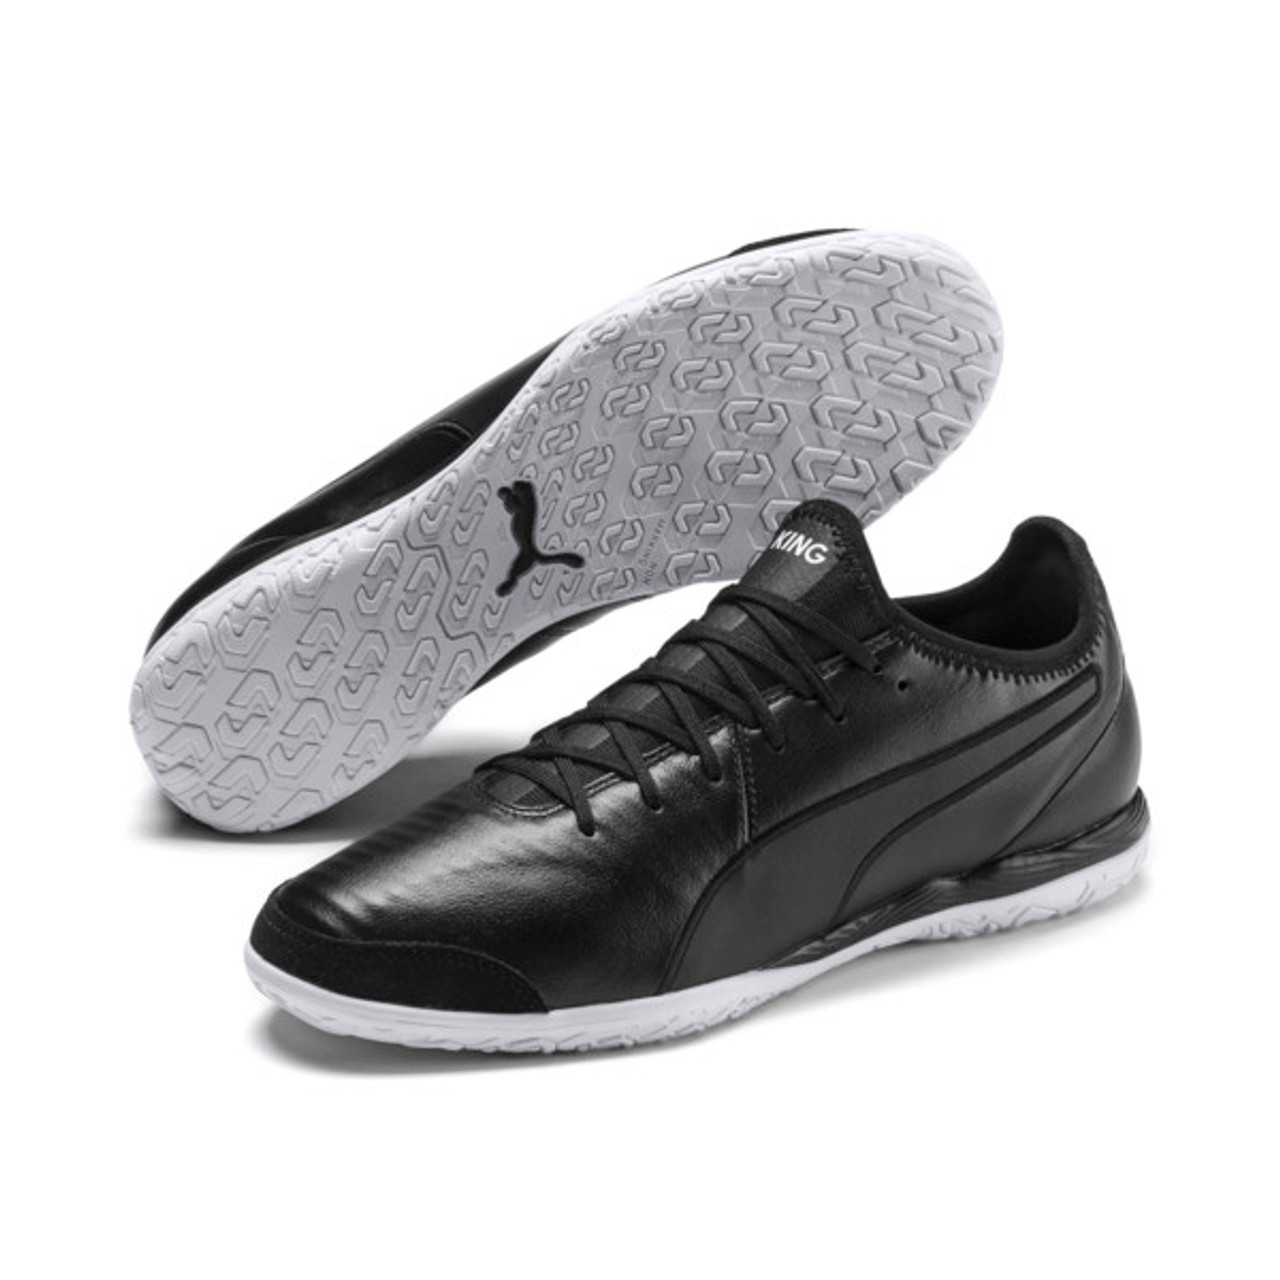 King Pro Indoor Shoes 01/Black-White - Chicago Soccer